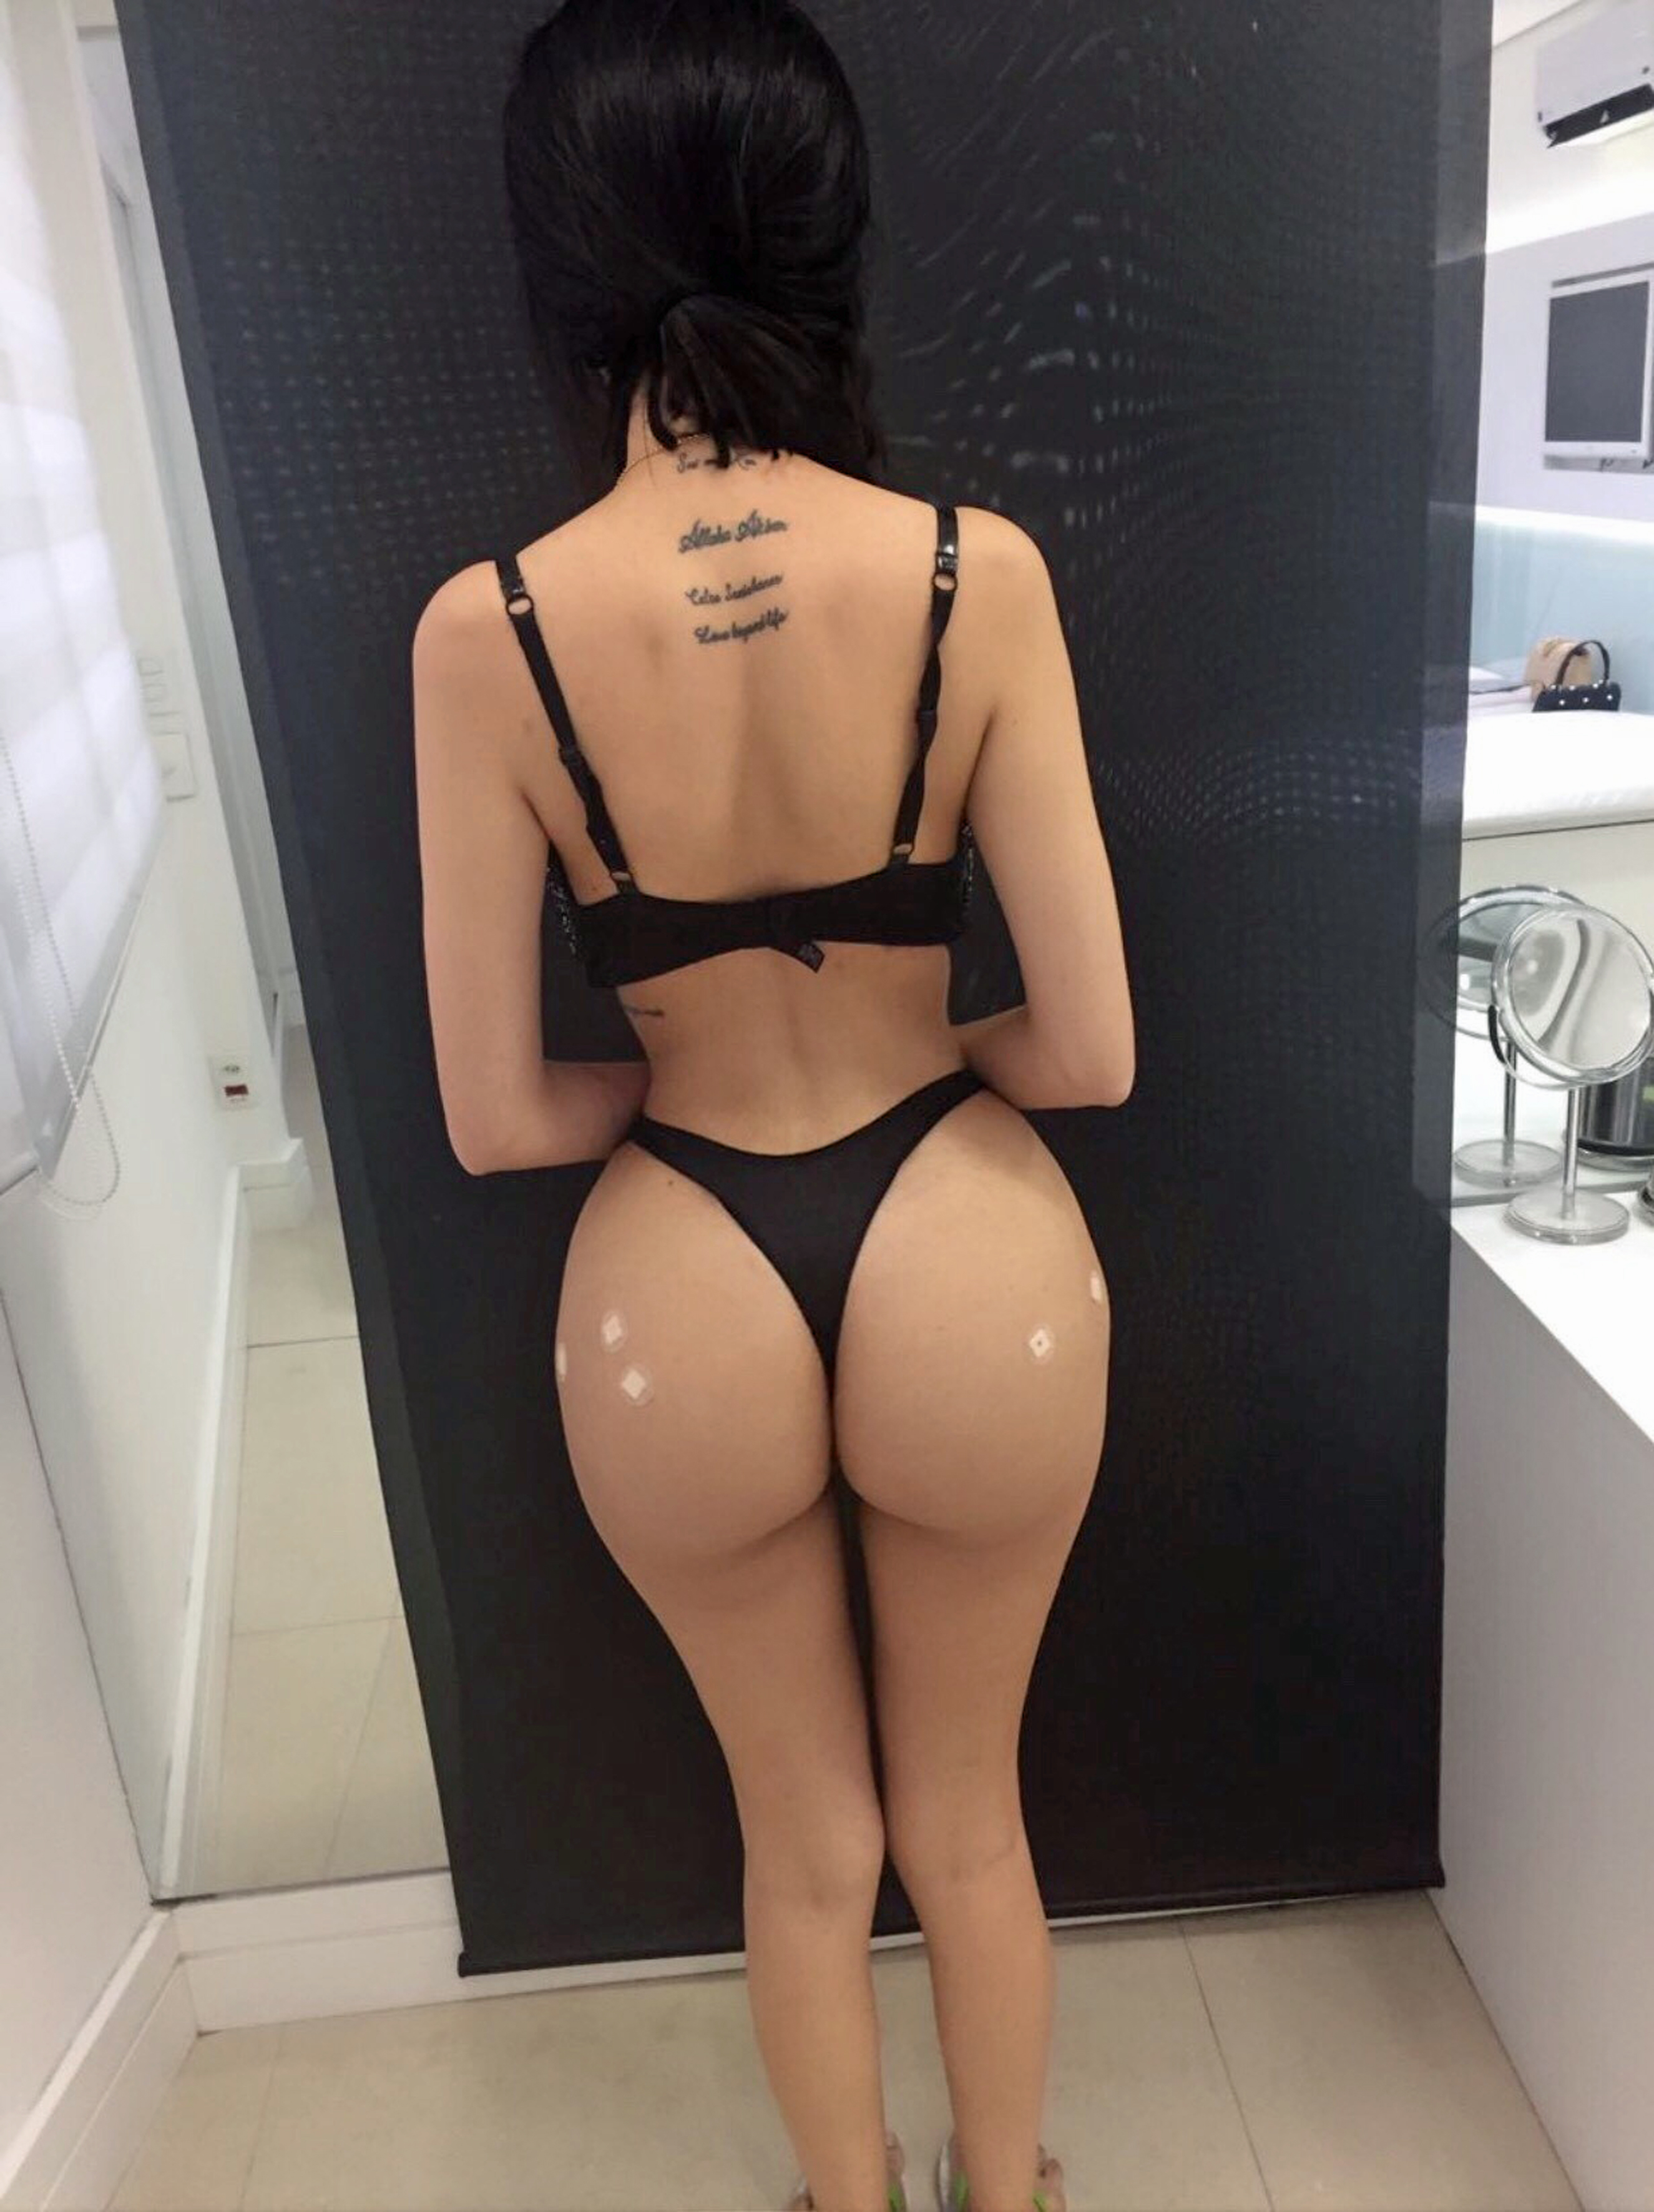 carlene kelly share skinny with big butt photos